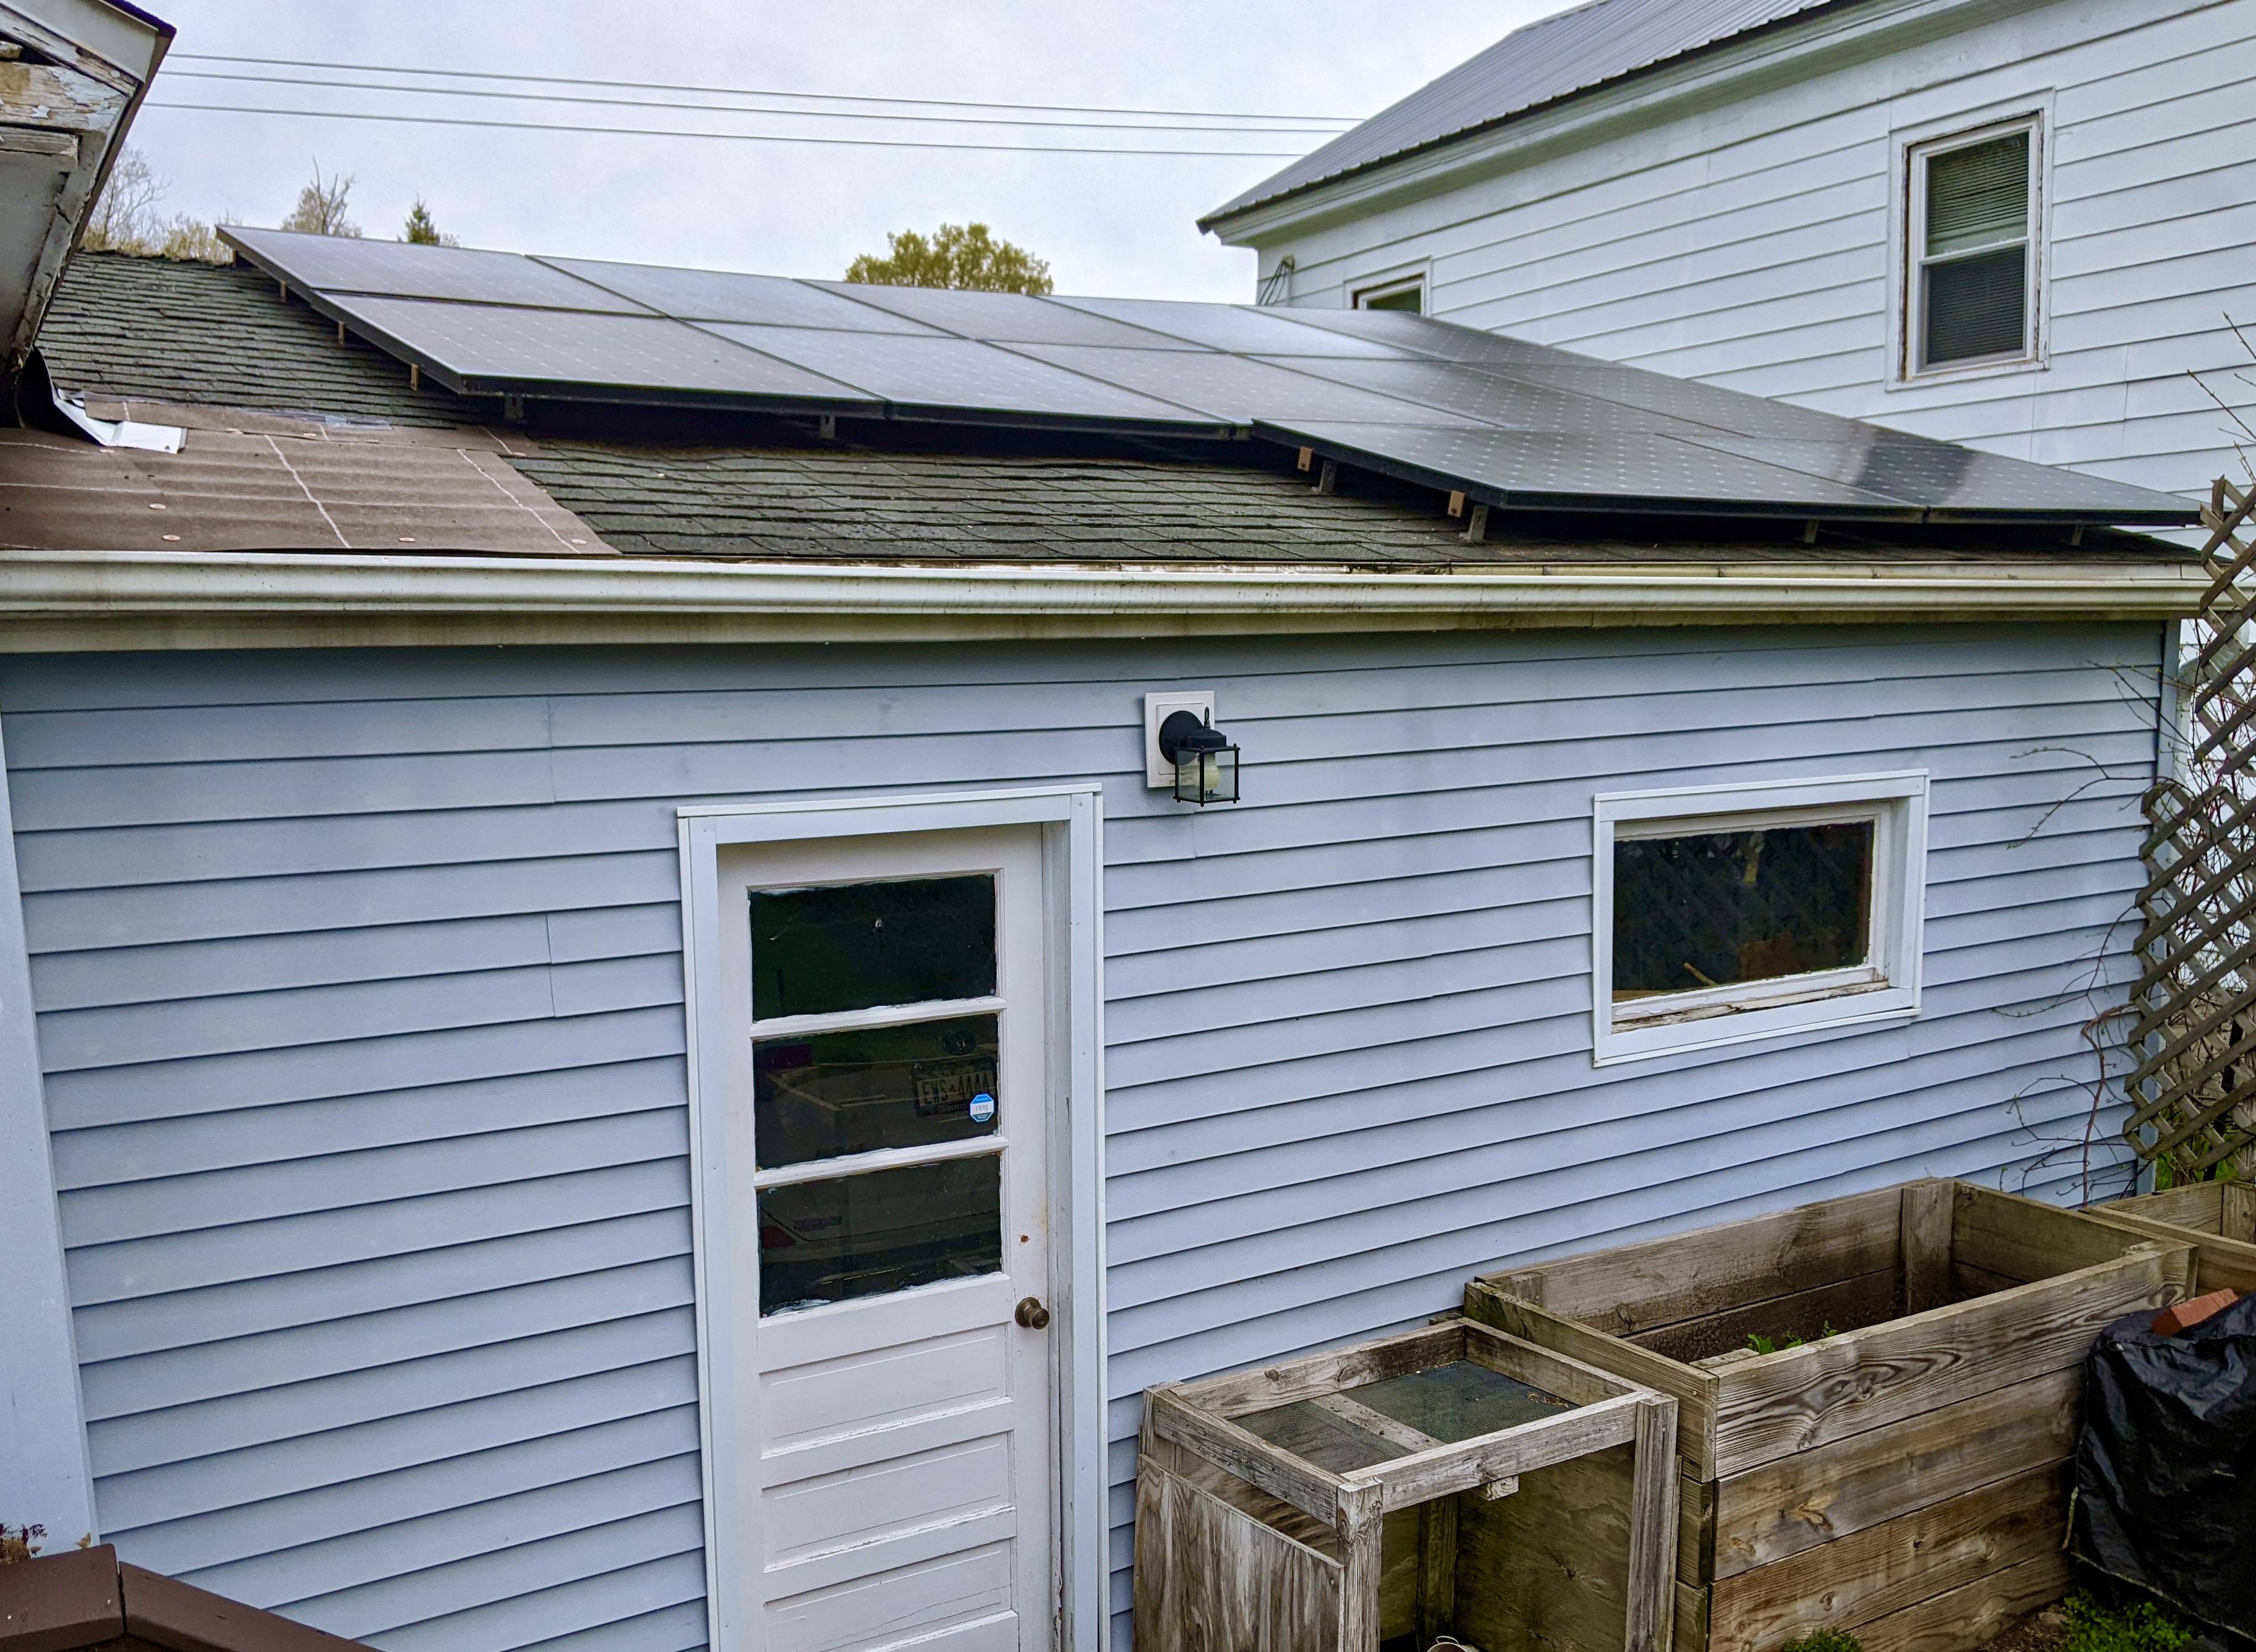 Photo of John Pumilio's solar panels.